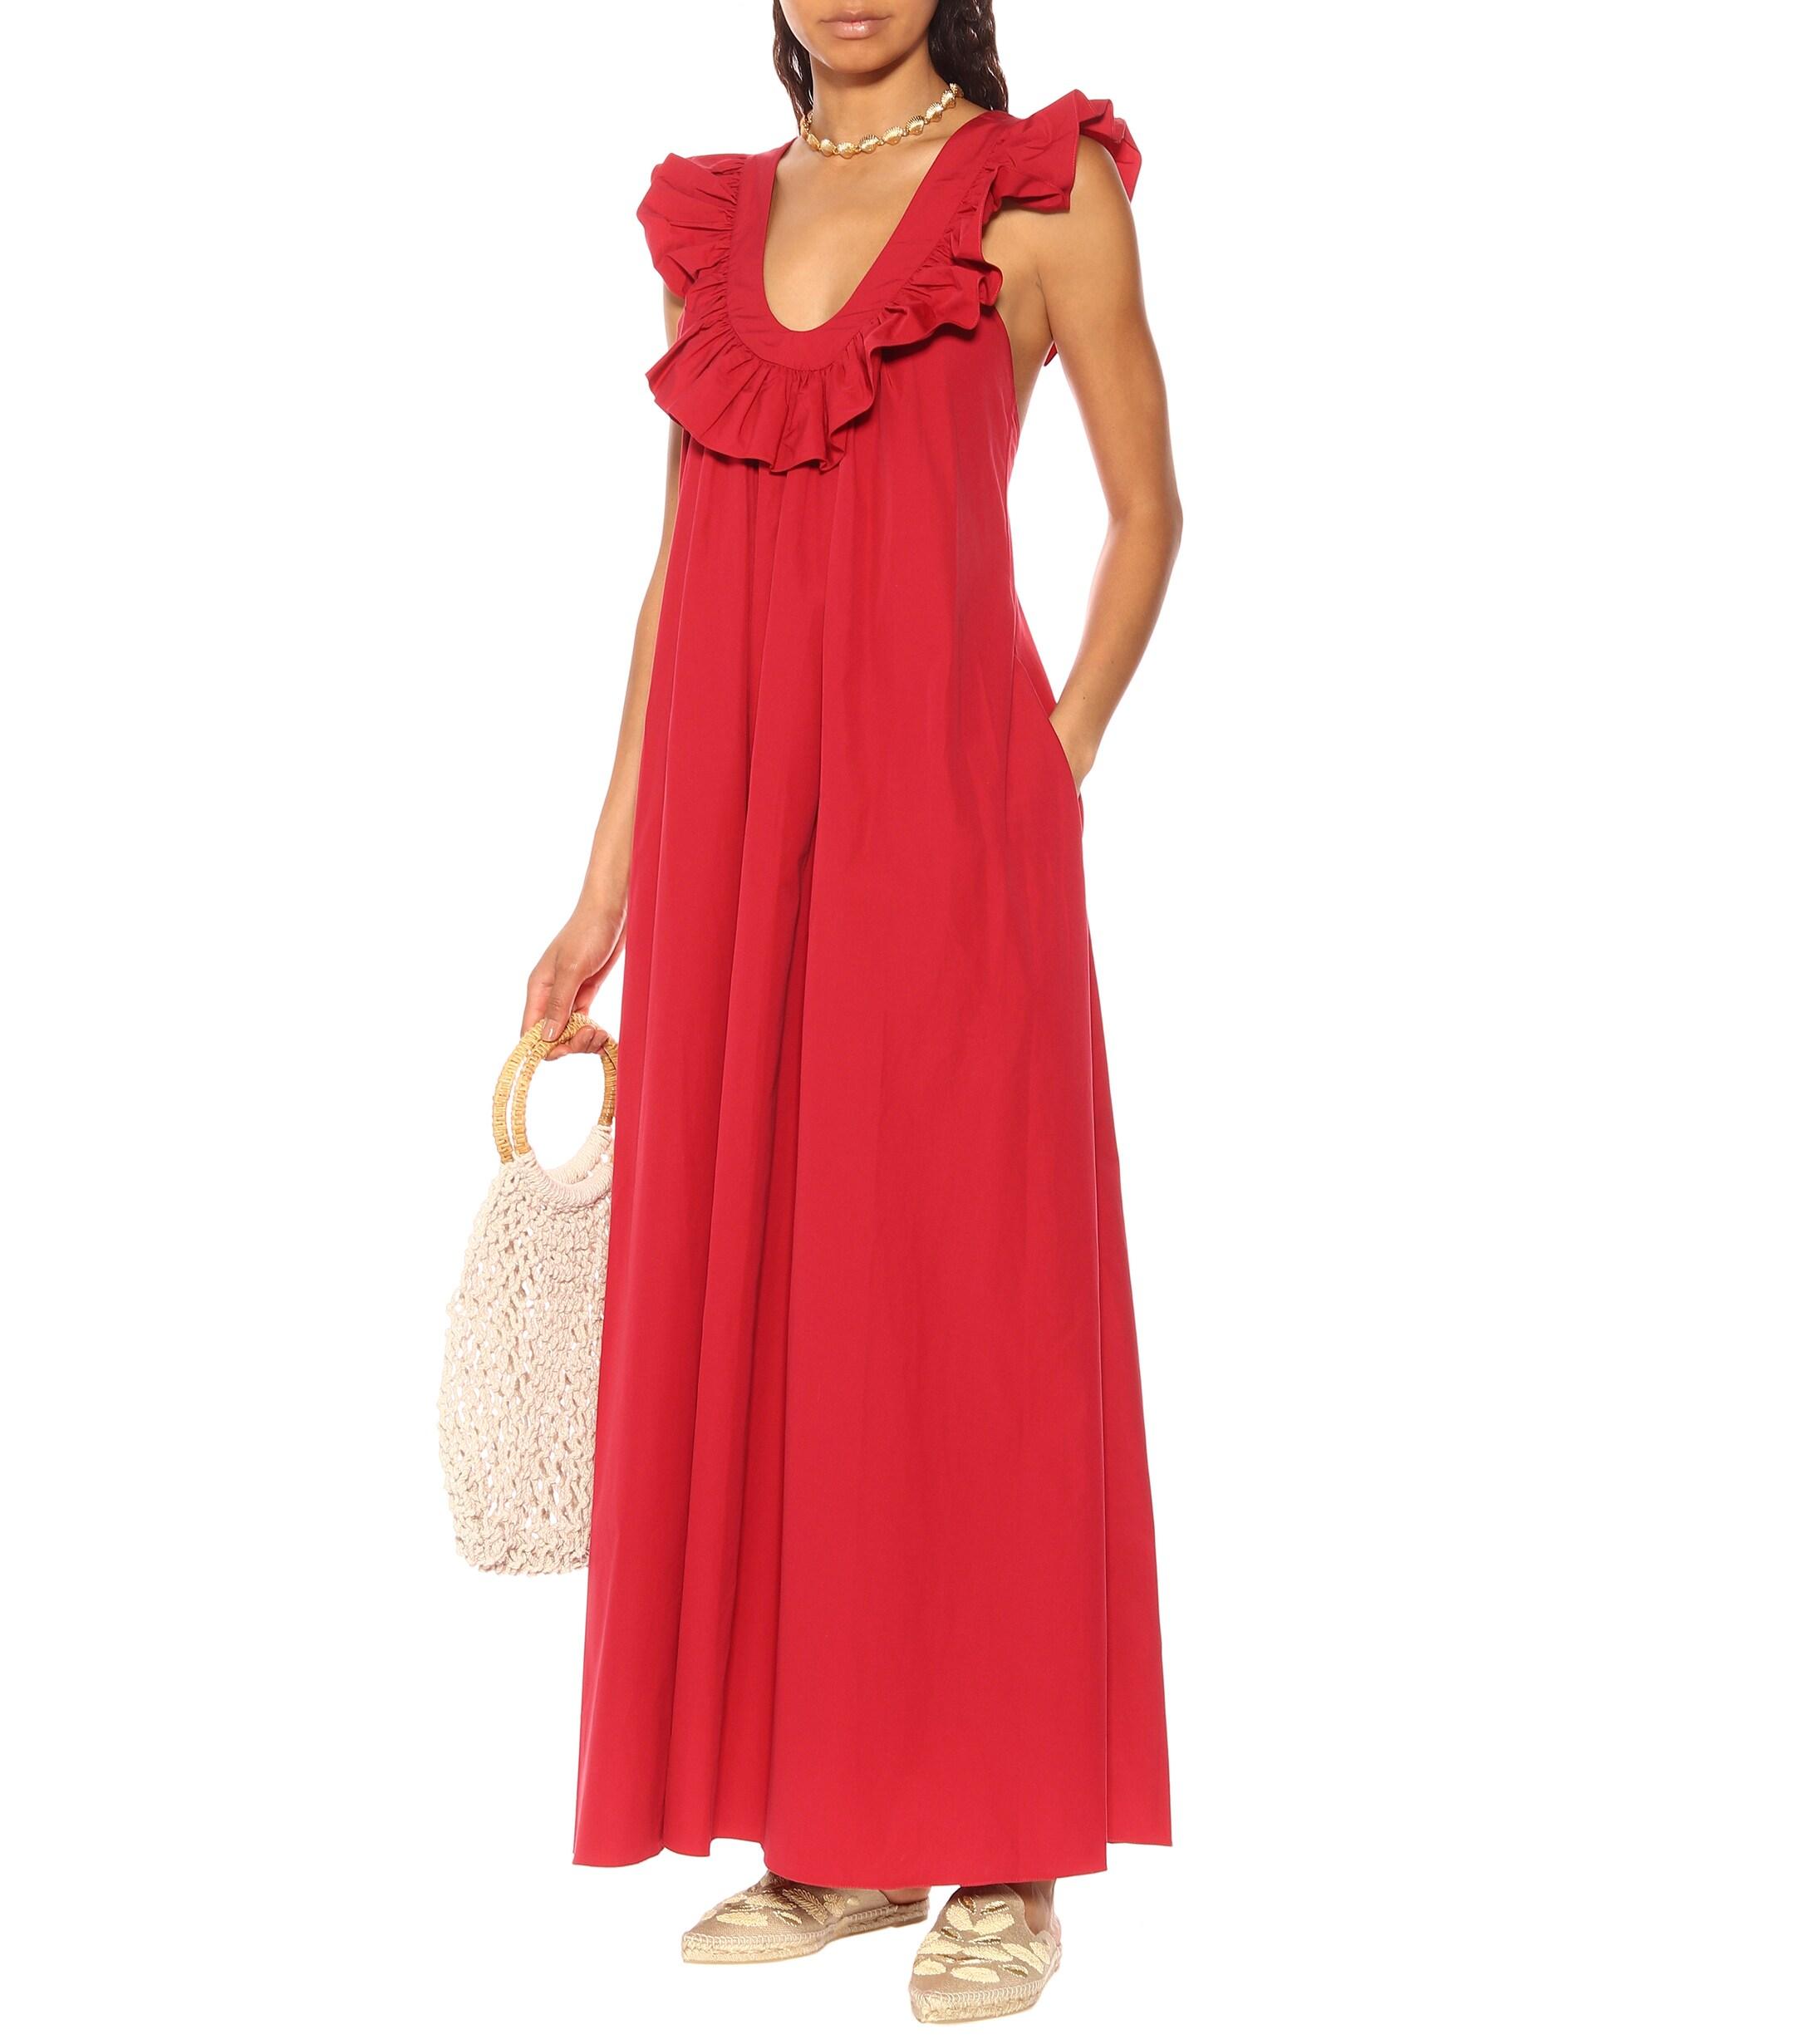 Three Graces London Geraldine Cotton Poplin Maxi Dress in Red - Lyst